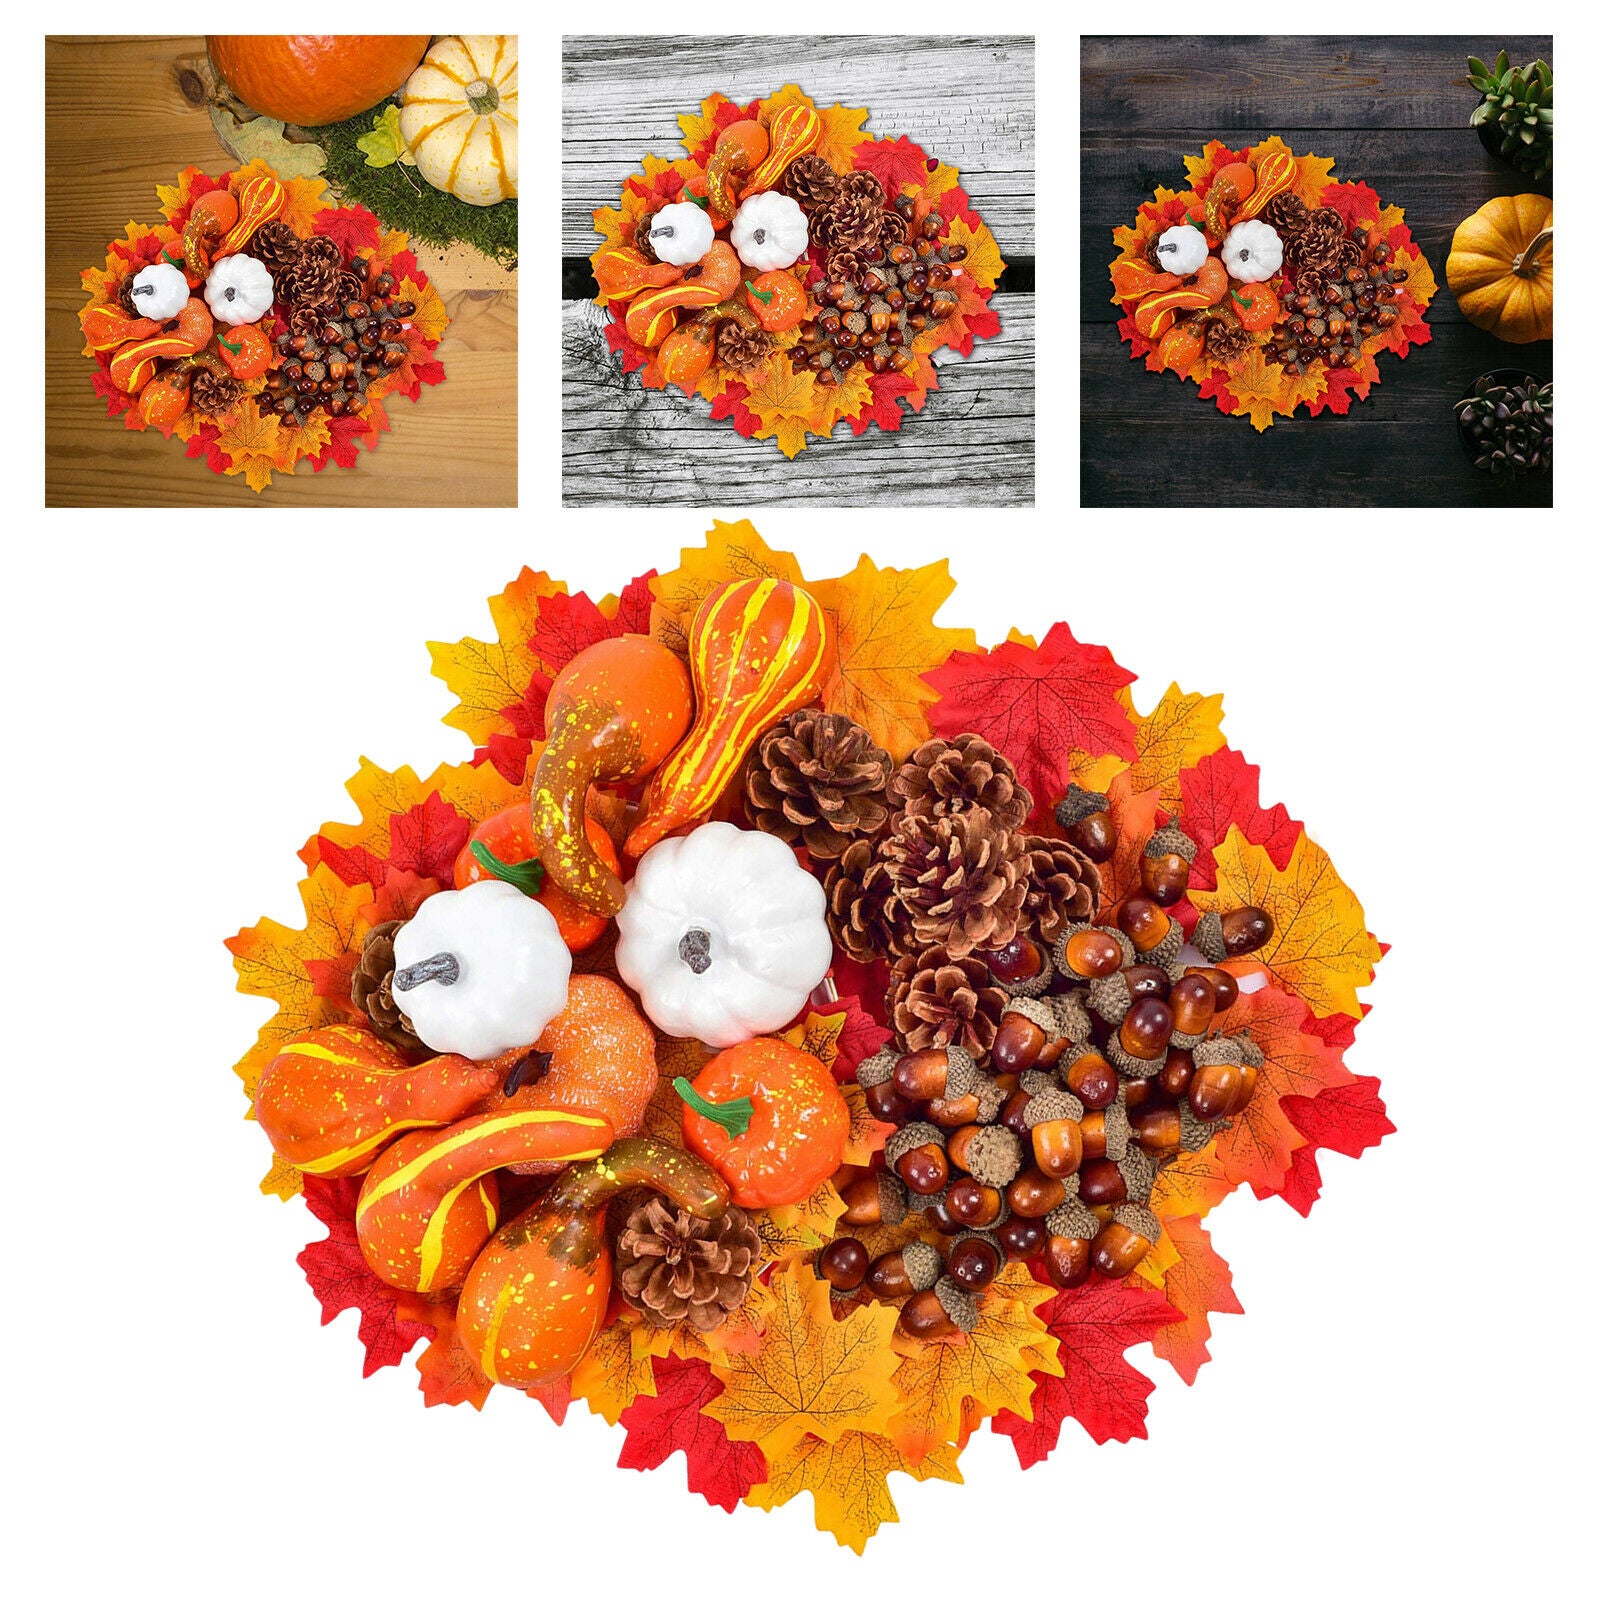 218 in 1 Artificial Pumpkins Maple Leaf Props Halloween Decoration Handwork